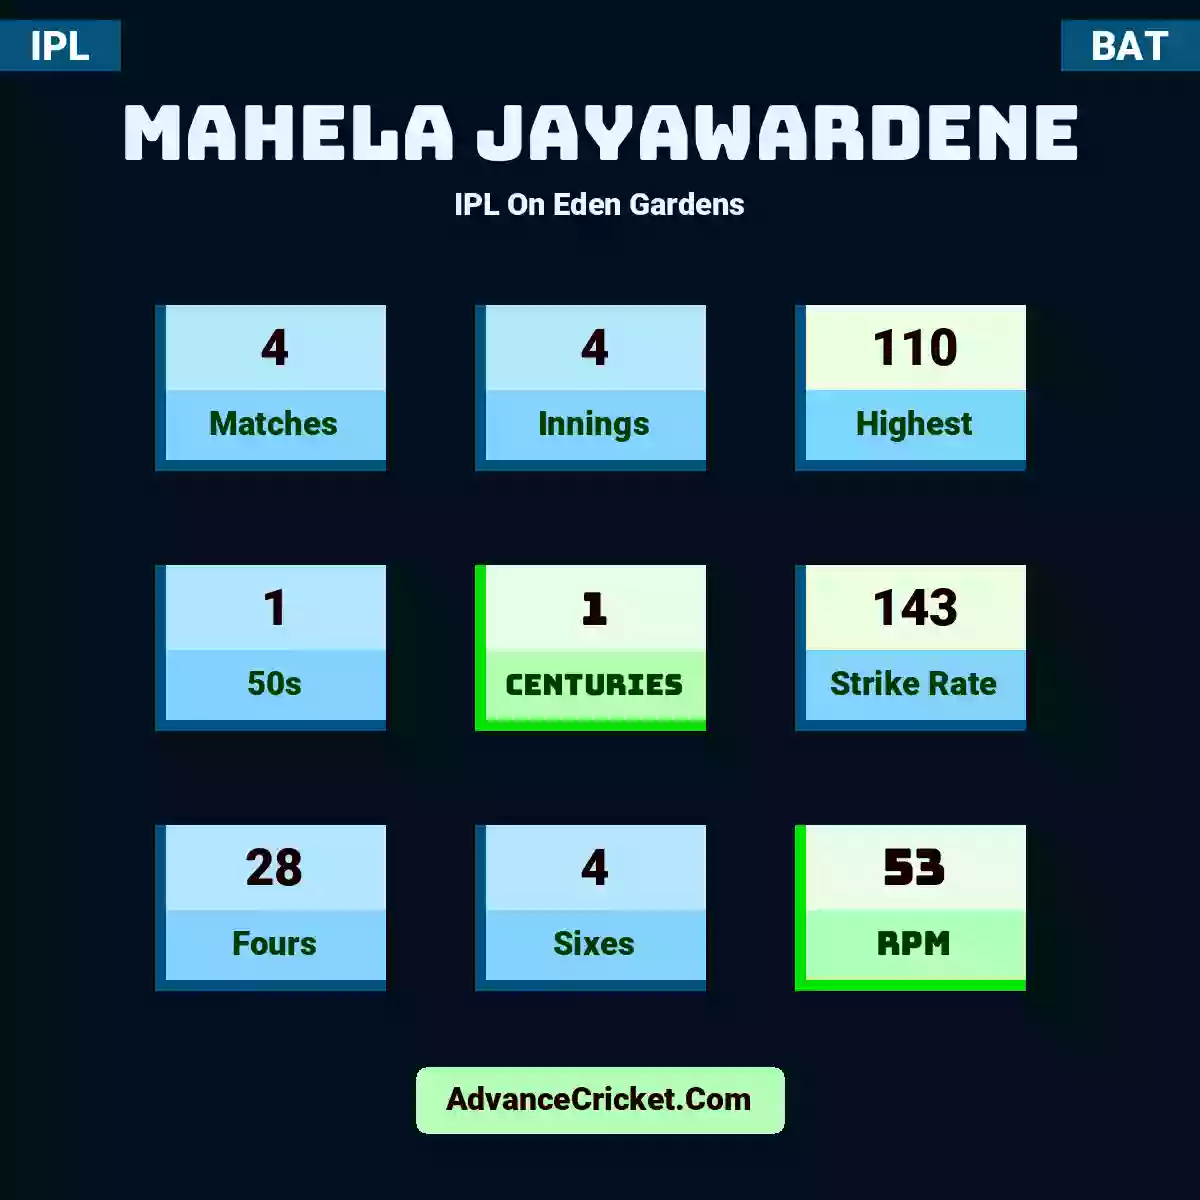 Mahela Jayawardene IPL  On Eden Gardens, Mahela Jayawardene played 4 matches, scored 110 runs as highest, 1 half-centuries, and 1 centuries, with a strike rate of 143. M.Jayawardene hit 28 fours and 4 sixes, with an RPM of 53.